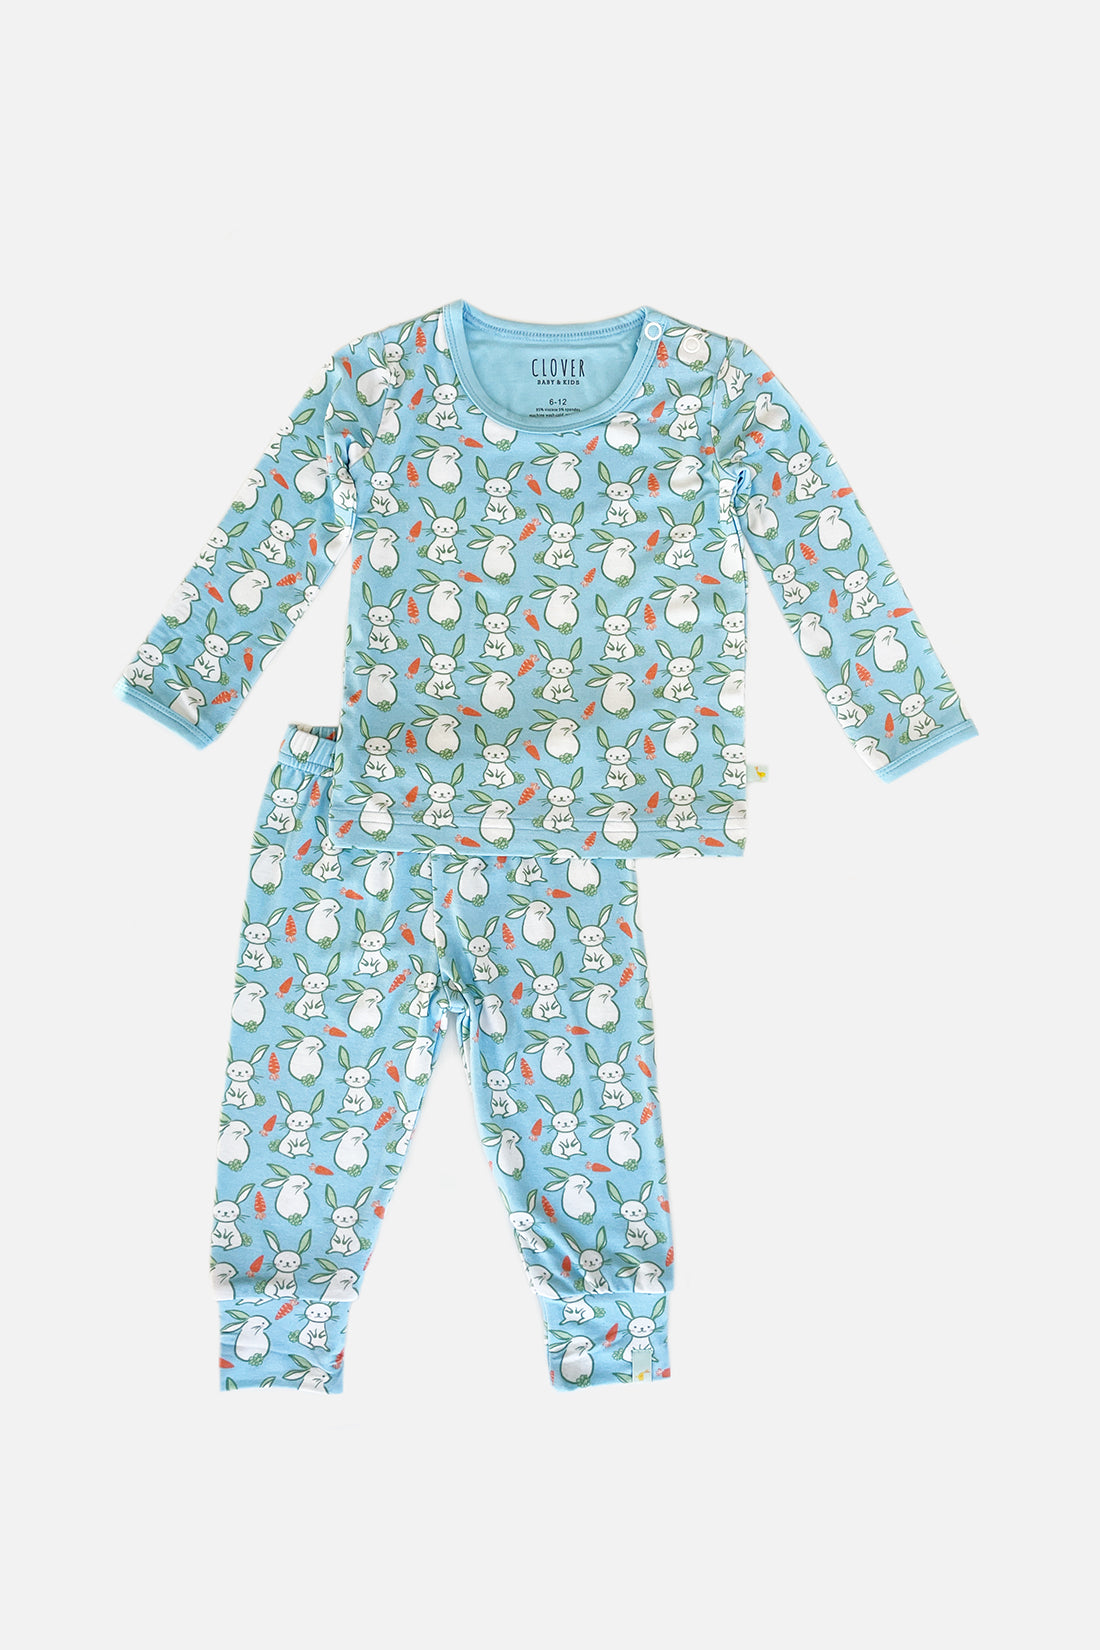 baby newborn toddler apparel – Clover Baby & Kids